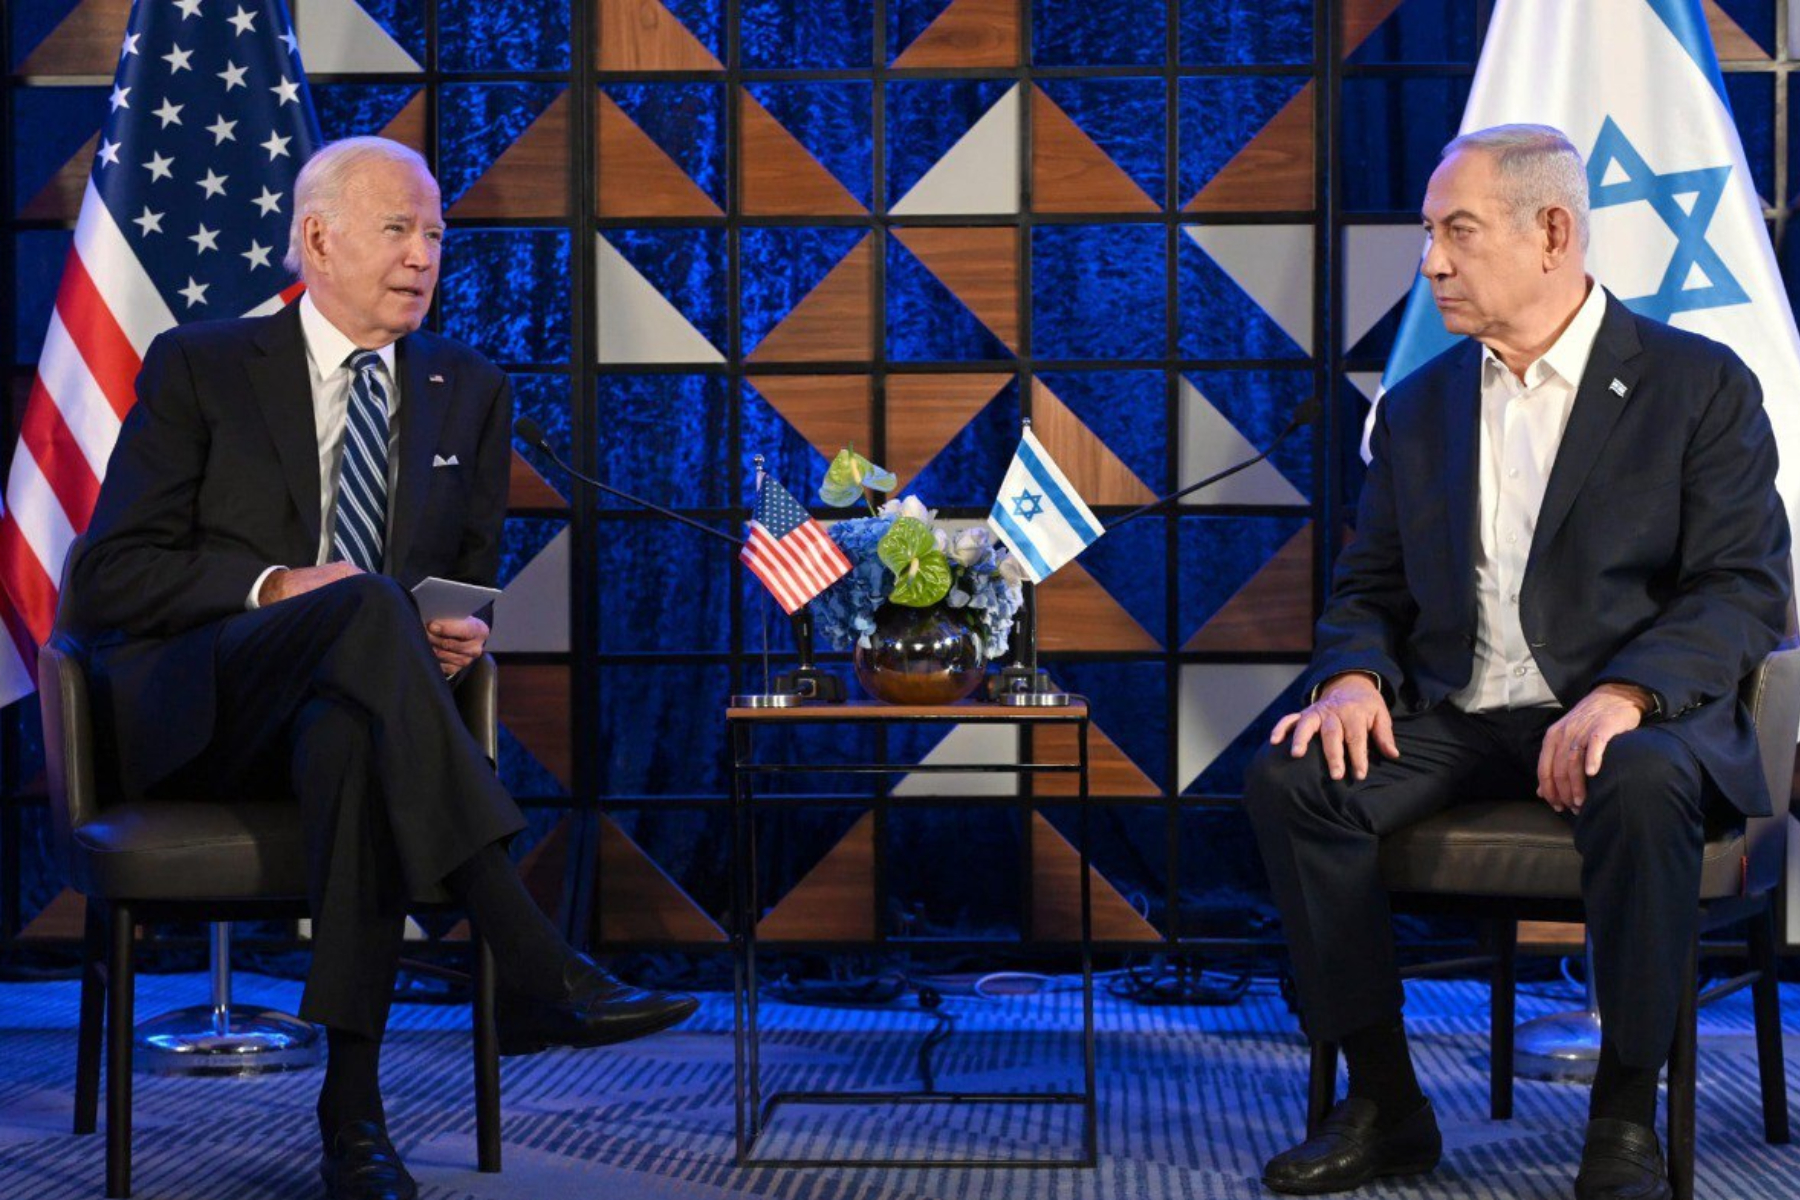 President Biden and Netanyahu Discuss Cease-Fire Deal, Humanitarian Aid